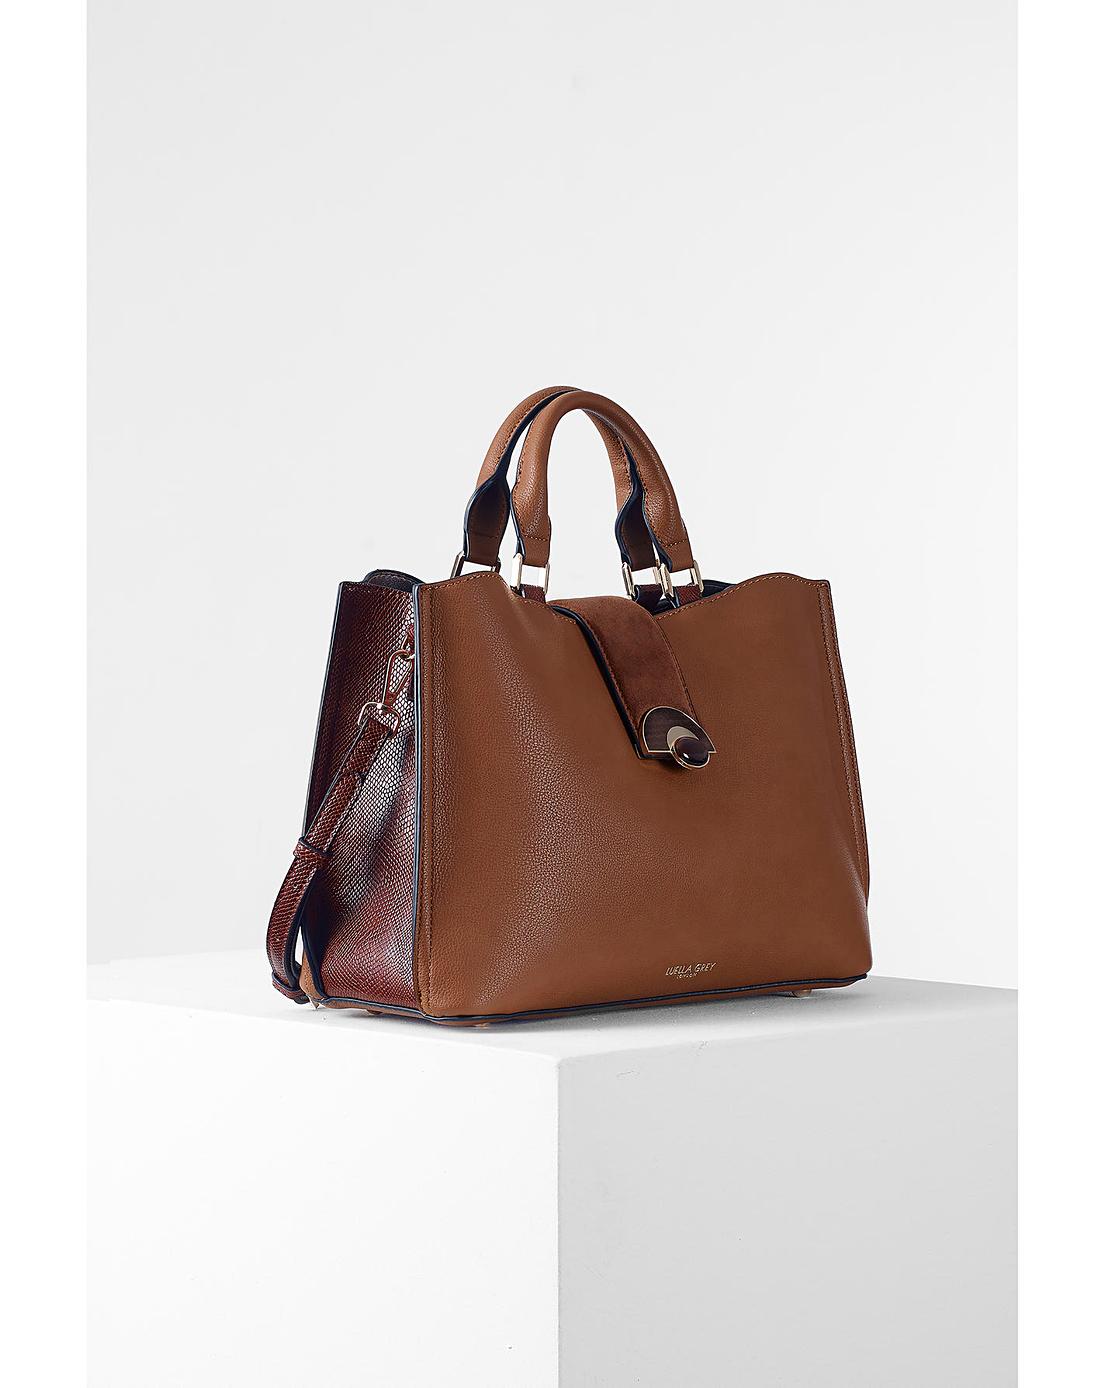 Luella Grey Evie Tote Bag | Simply Be